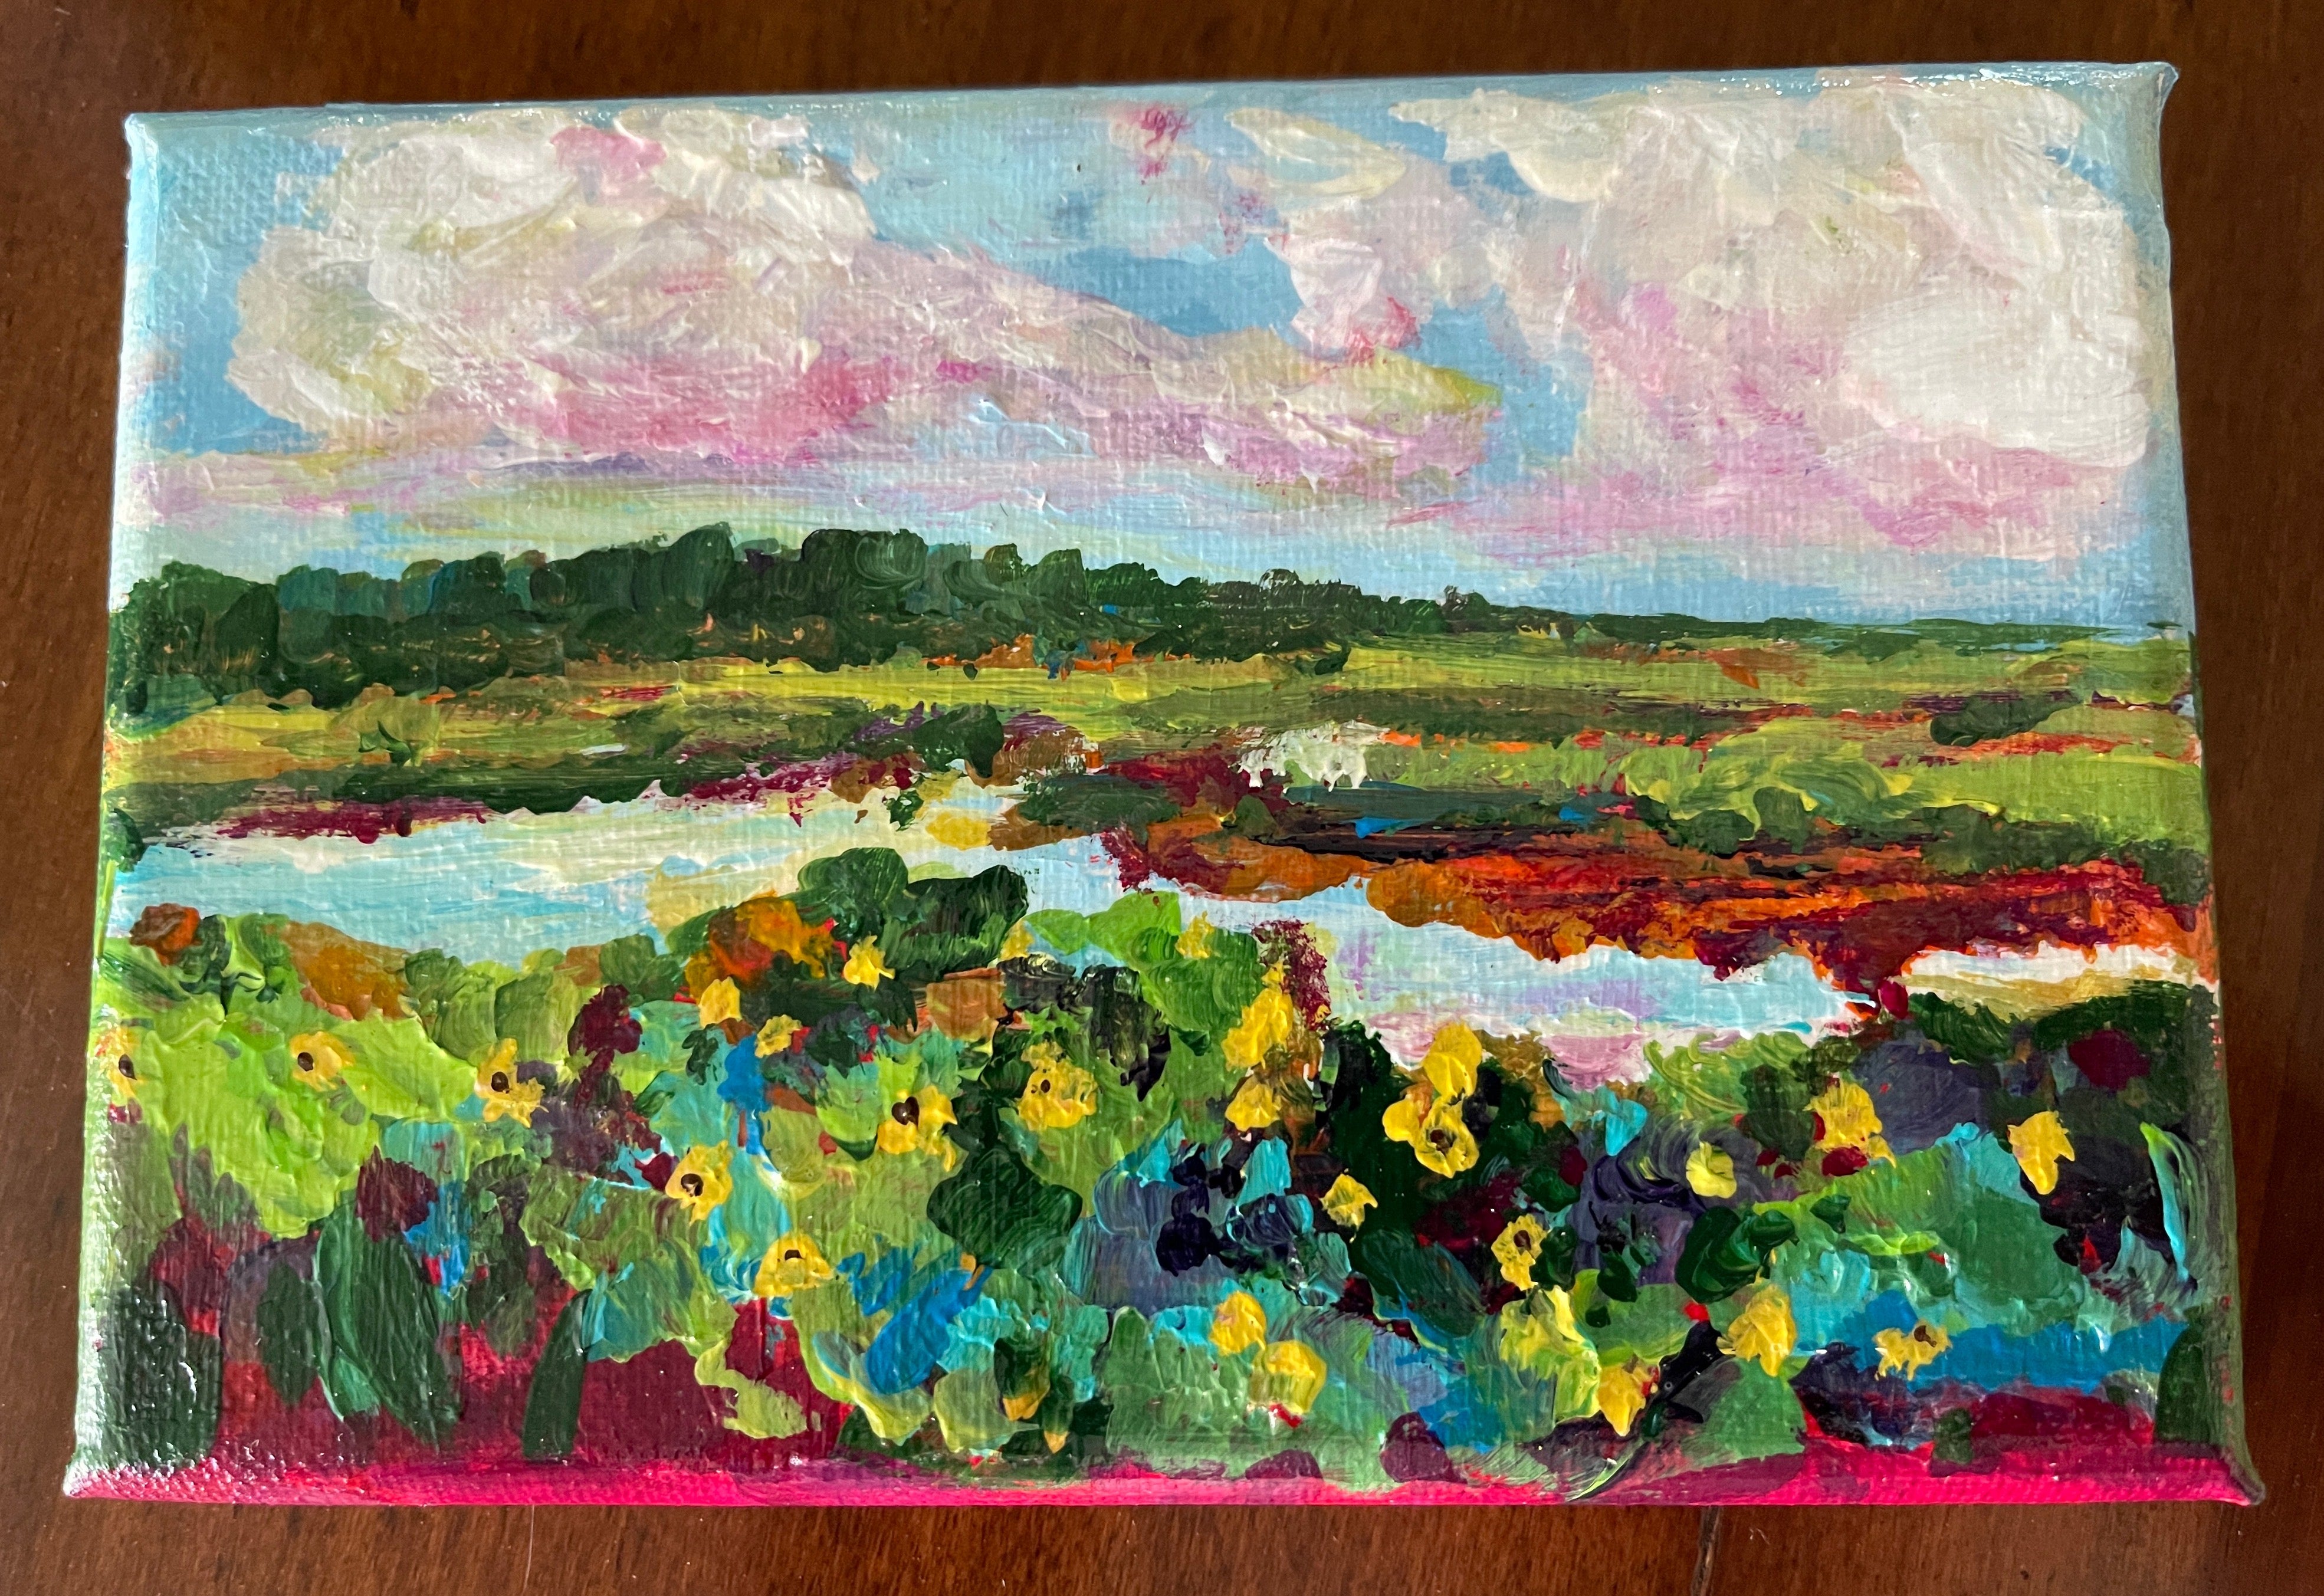 South Carolina Low Country Mini Marsh Landscapes (4" x 6")